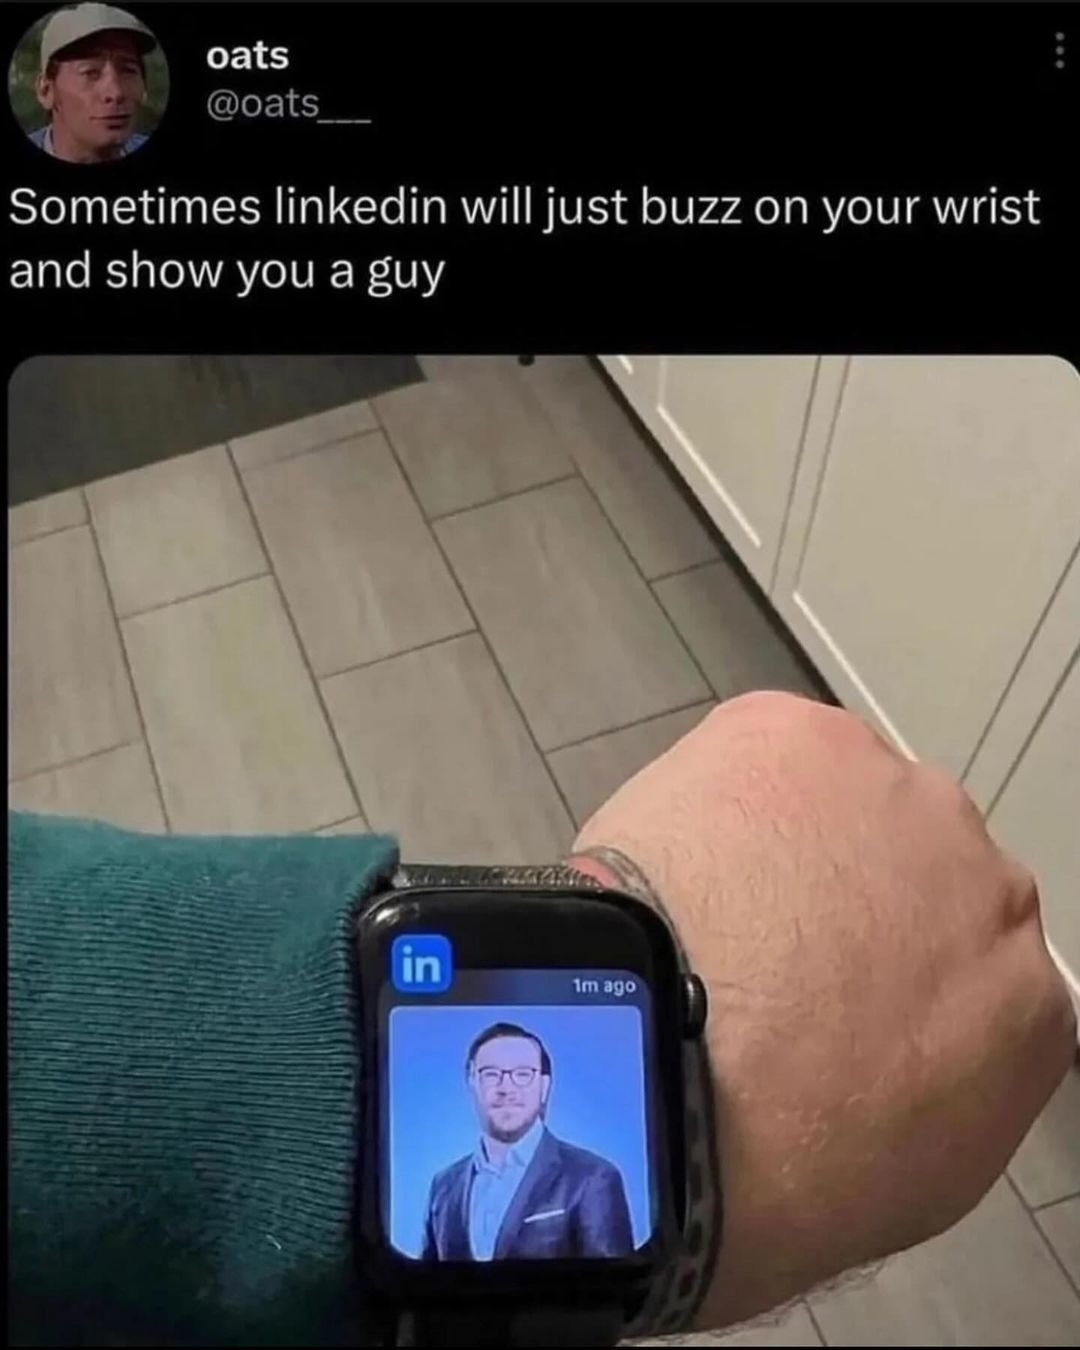 watch is like “i know a guy” - meme